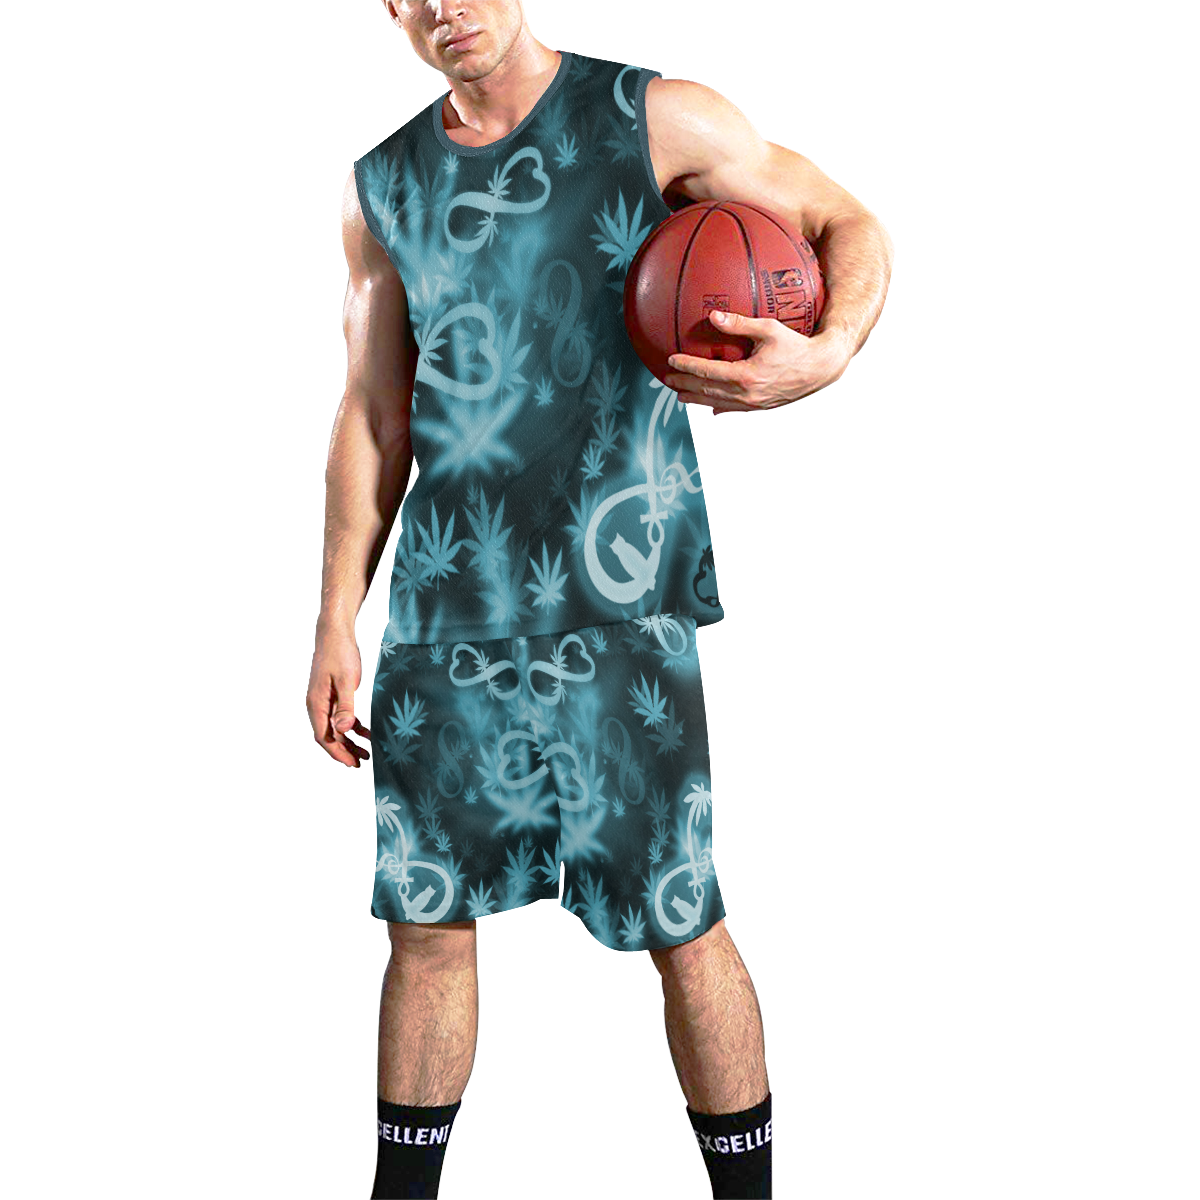 INFINITY BLUE COSMOS All Over Print Basketball Uniform